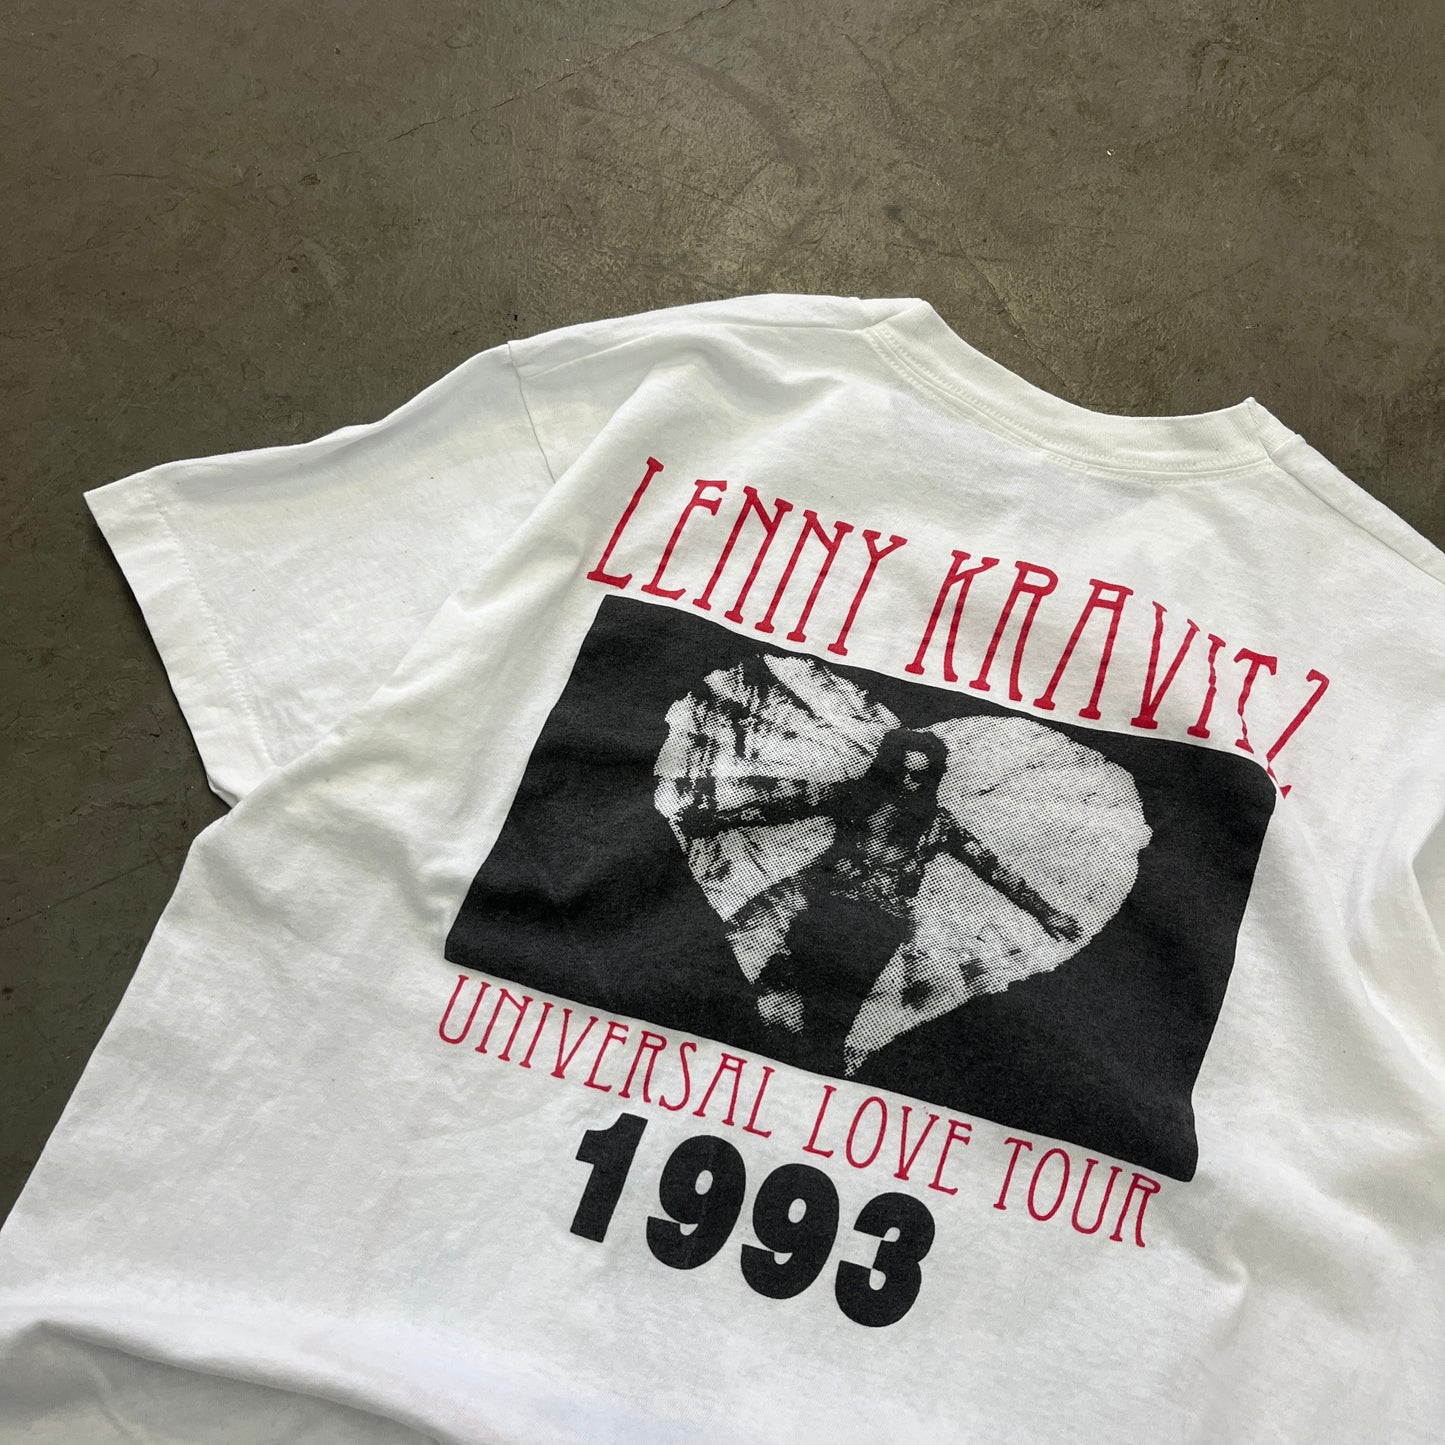 LENNY KRAVITZ UNIVERSAL LOVE 1993 [XL]